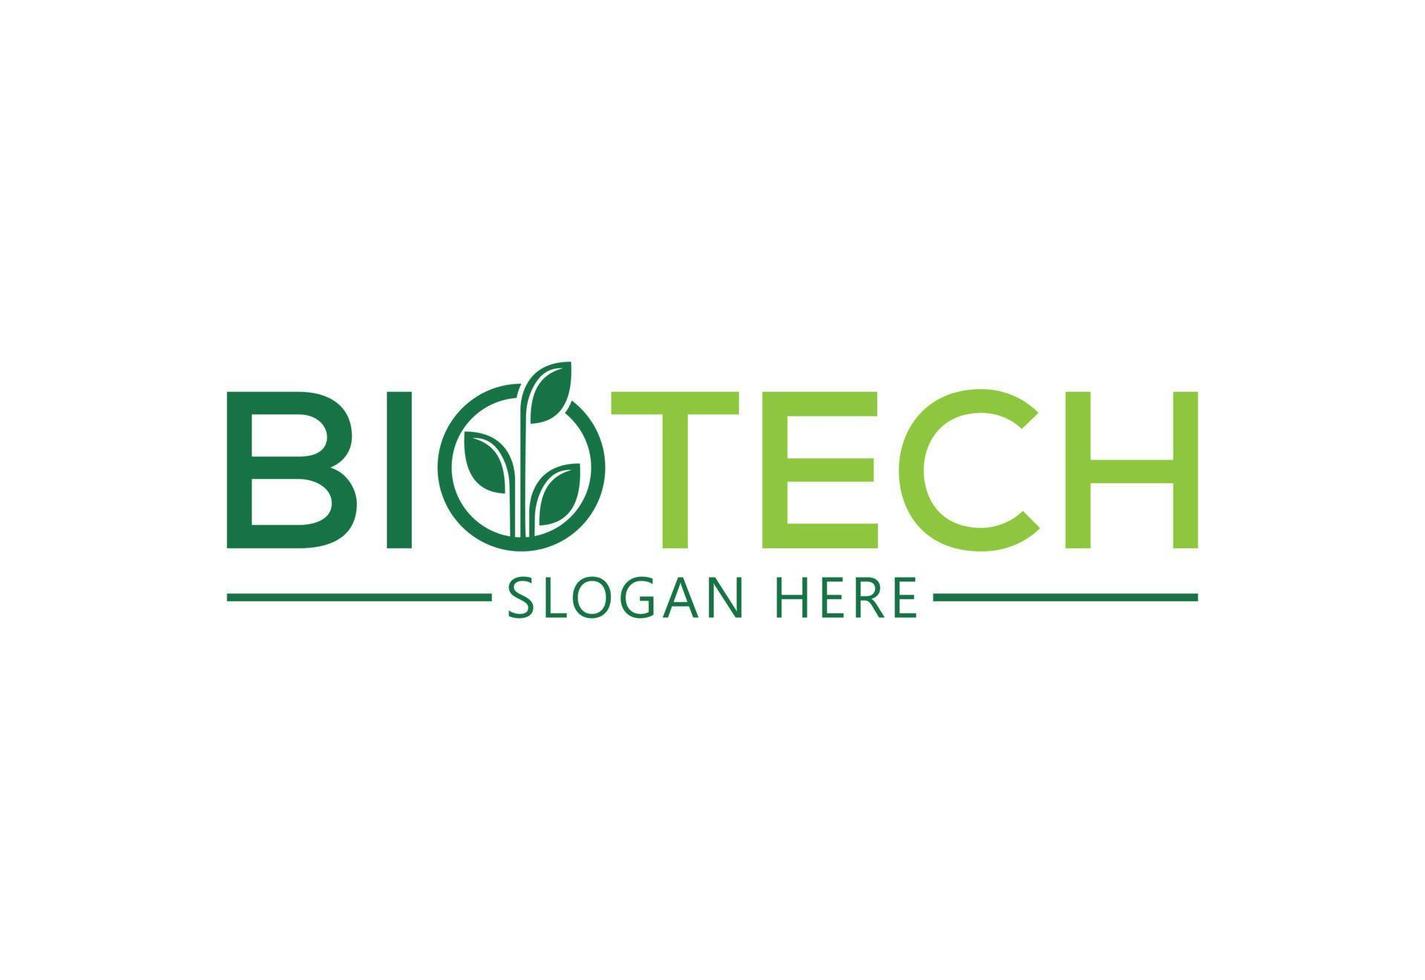 design de logotipo de biotecnologia, modelo de design vetorial vetor